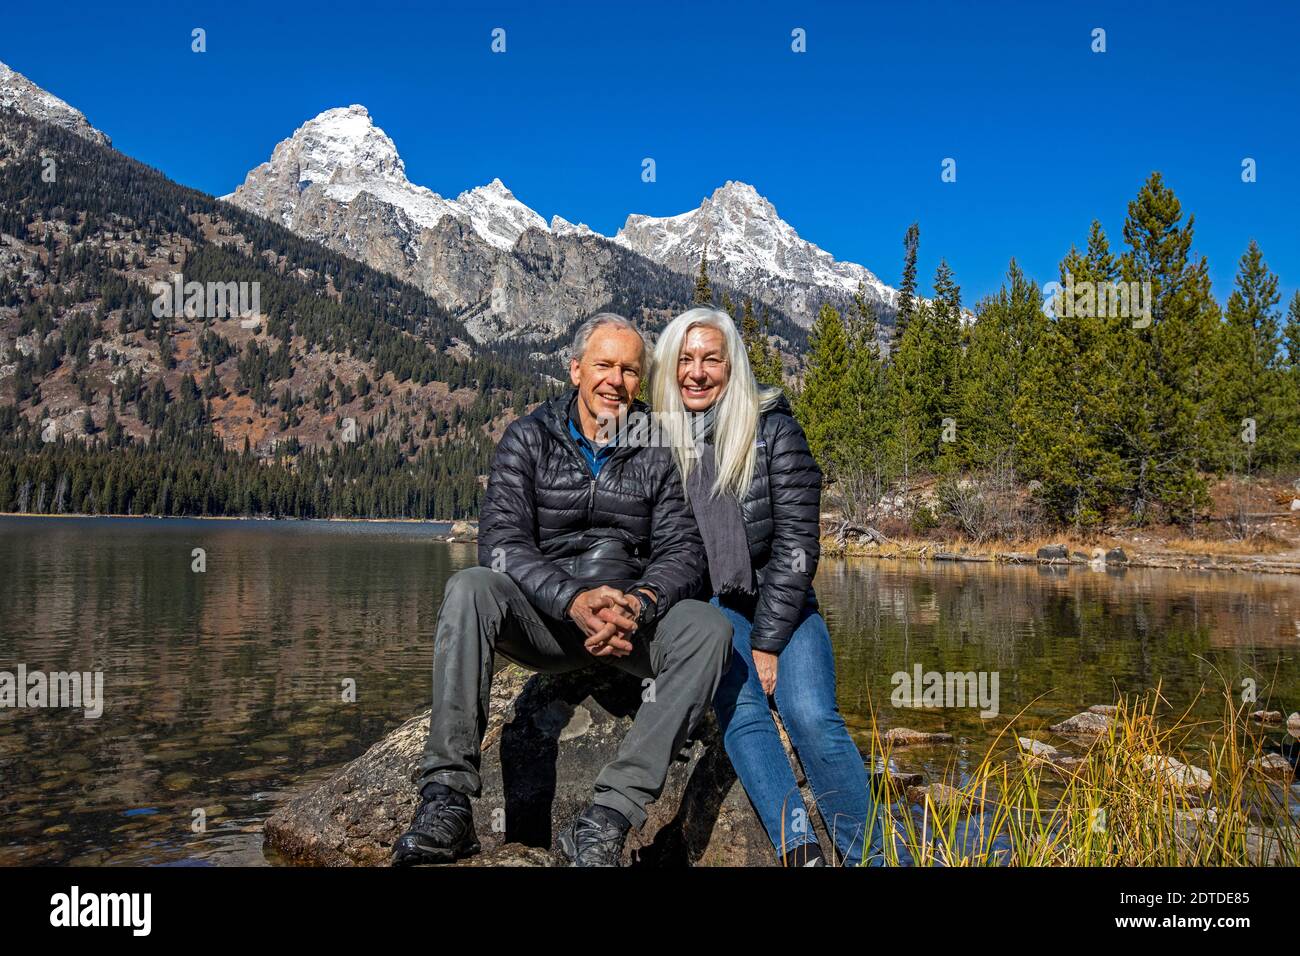 USA, Wyoming, Jackson, Grand Teton National Park, Outdoor portrait of senior couple sitting on rock by Taggart Lake in Grand Teton National Park Stock Photo